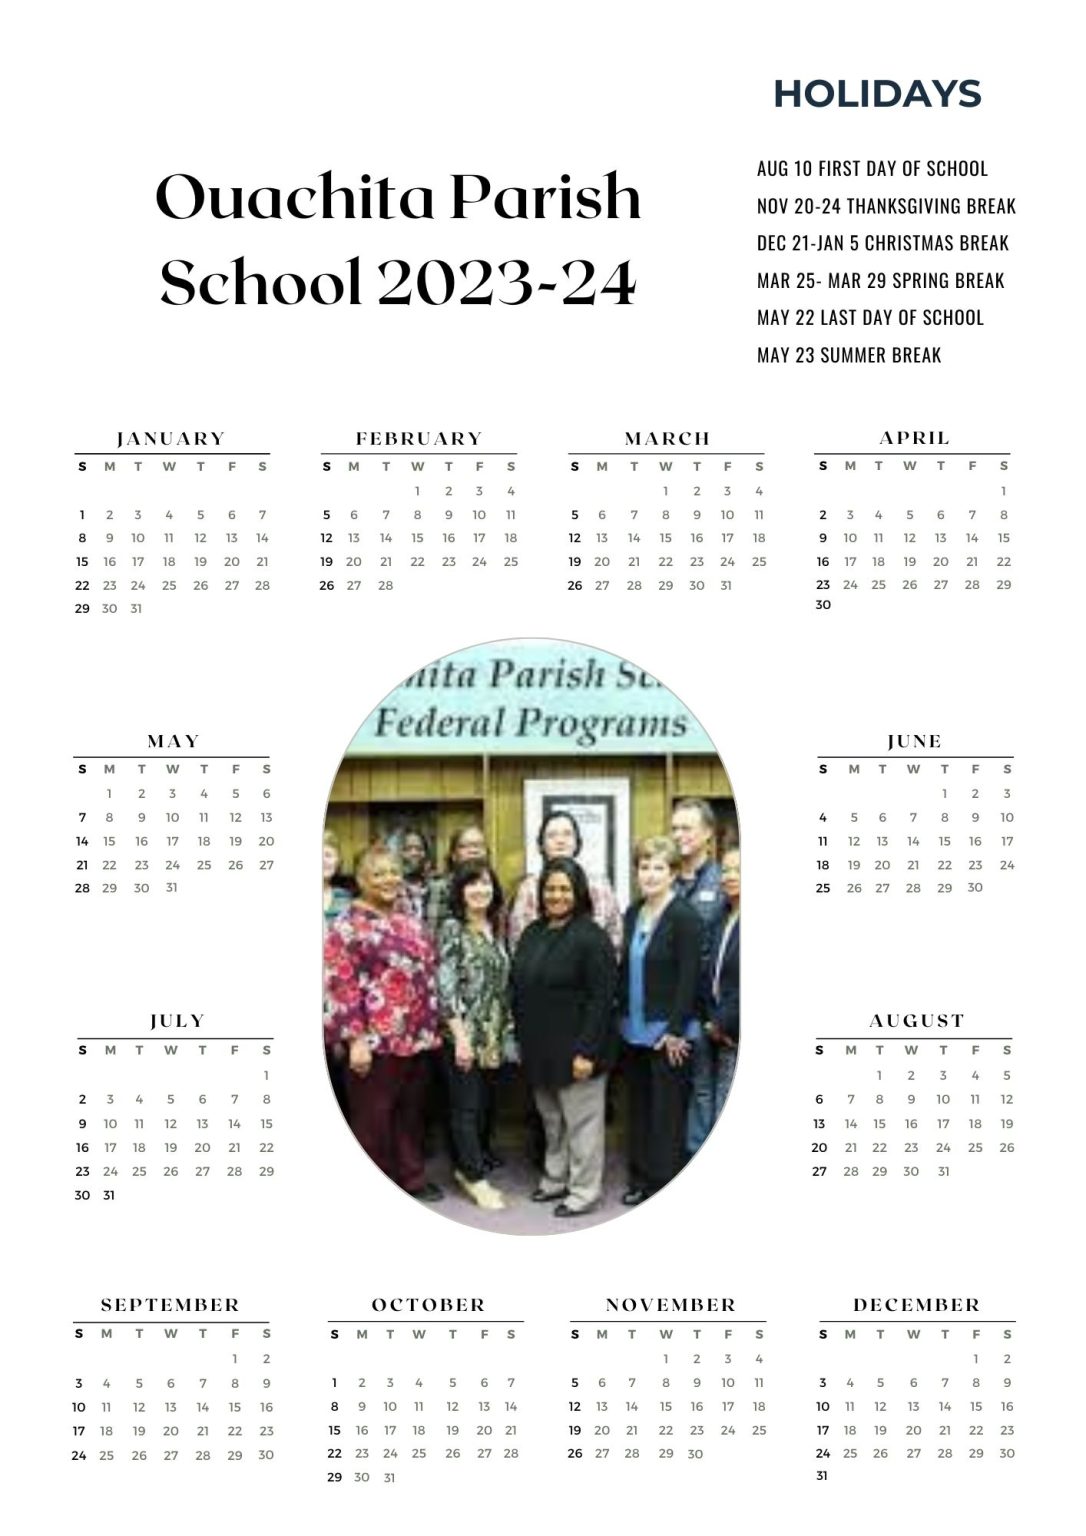 ouachita-parish-school-calendar-holidays-2023-2024